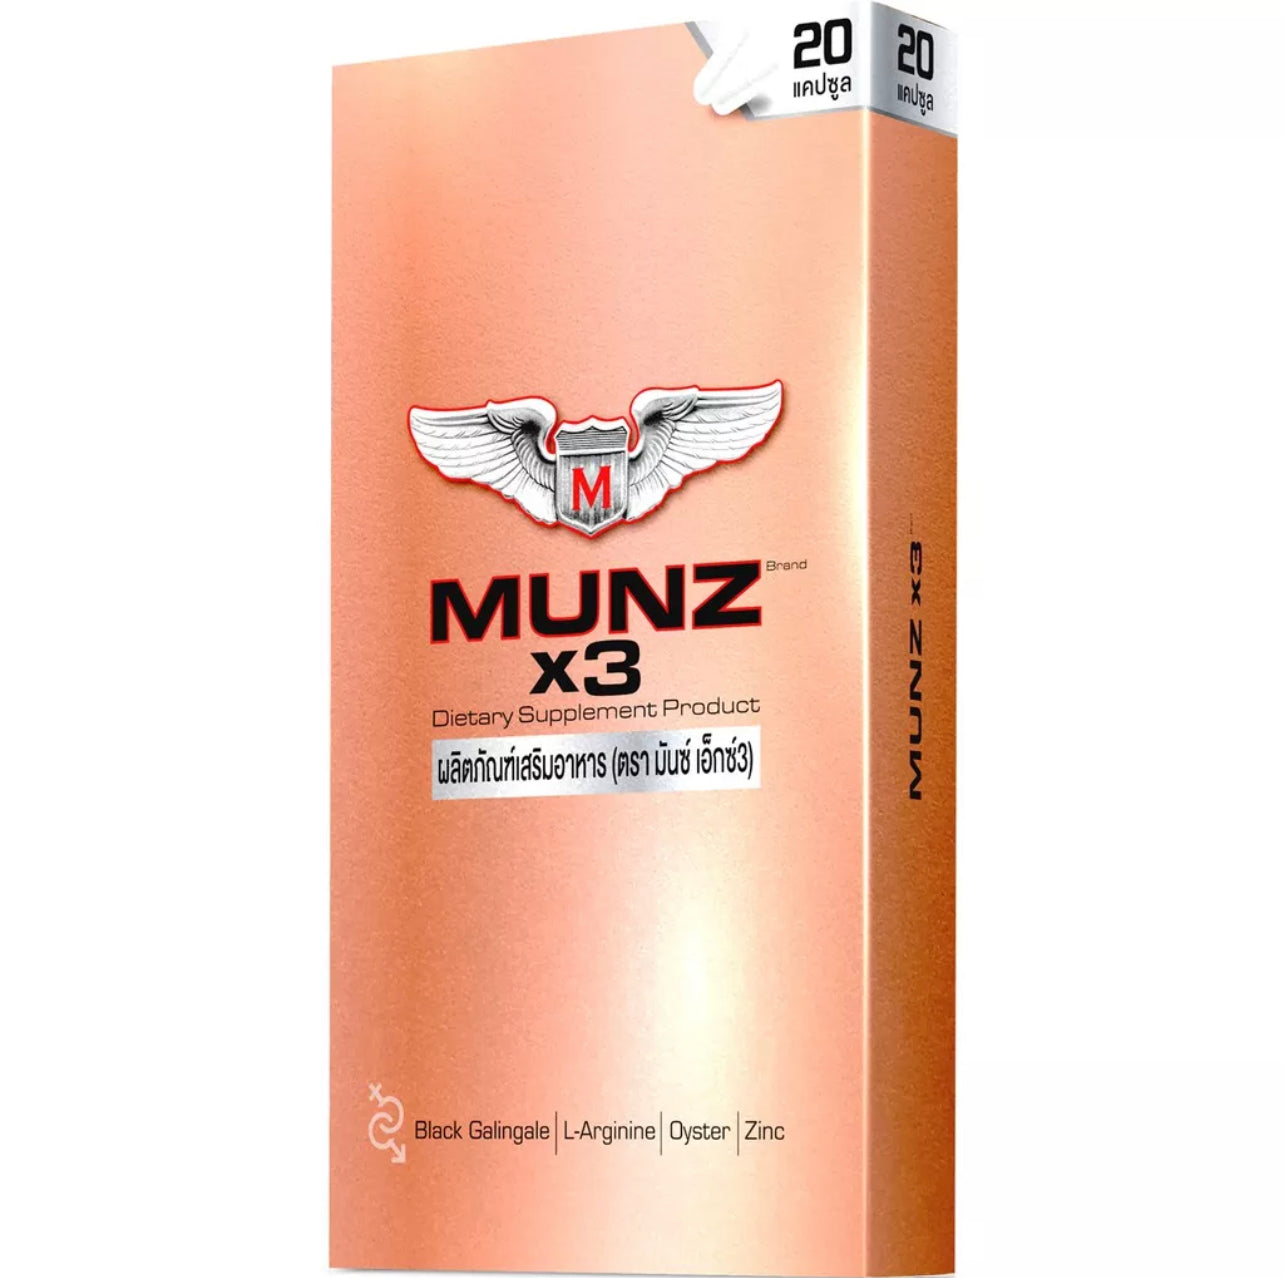 Munz x3 Performance Enhancer Supplement